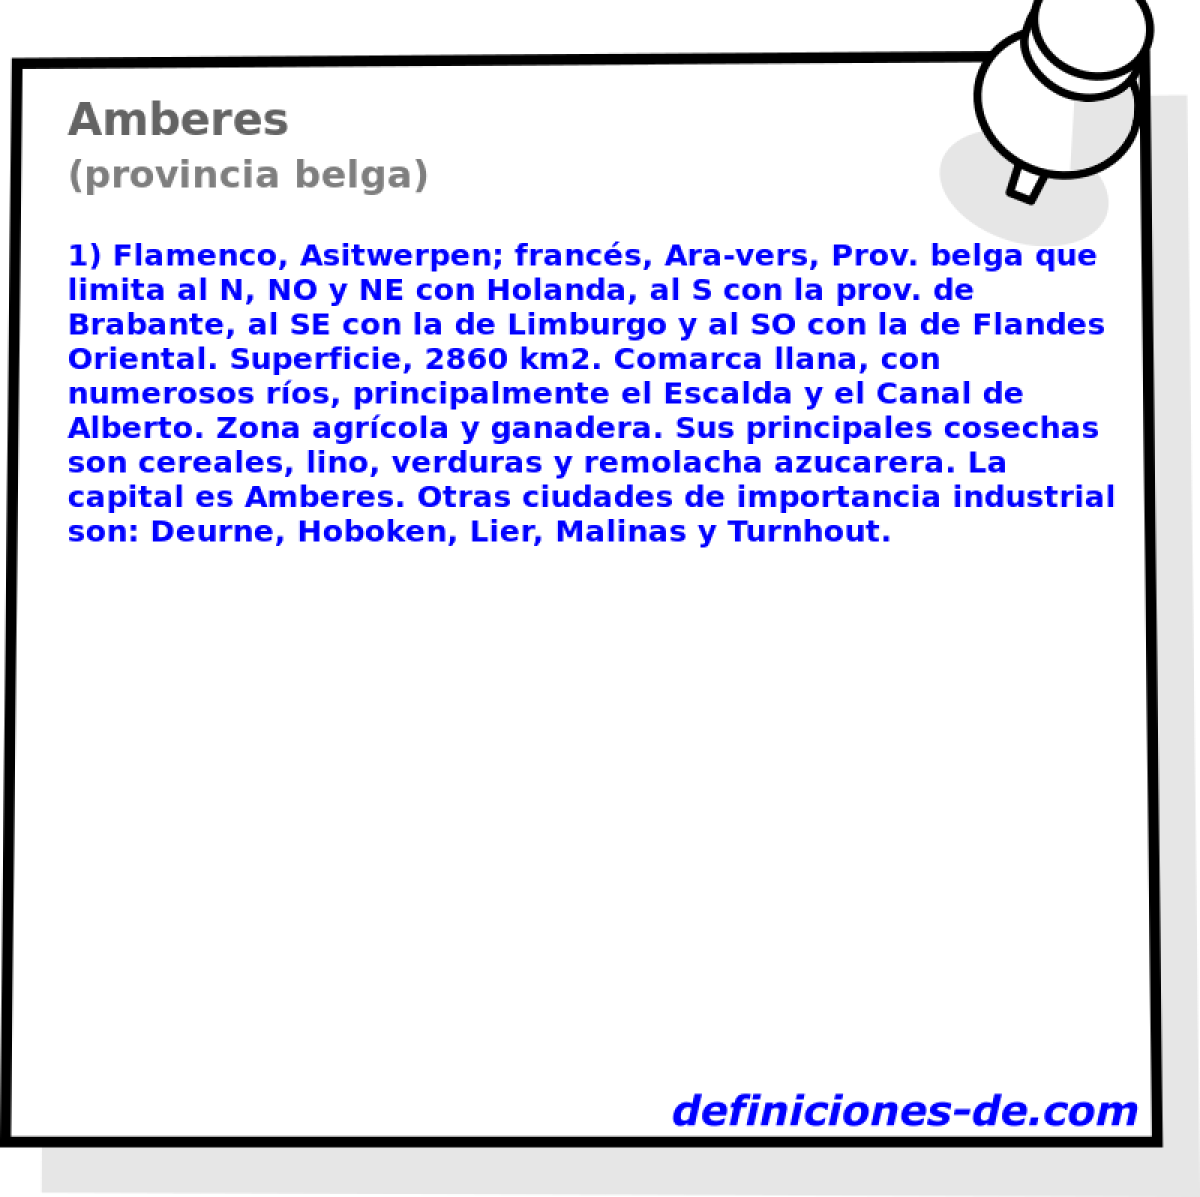 Amberes (provincia belga)